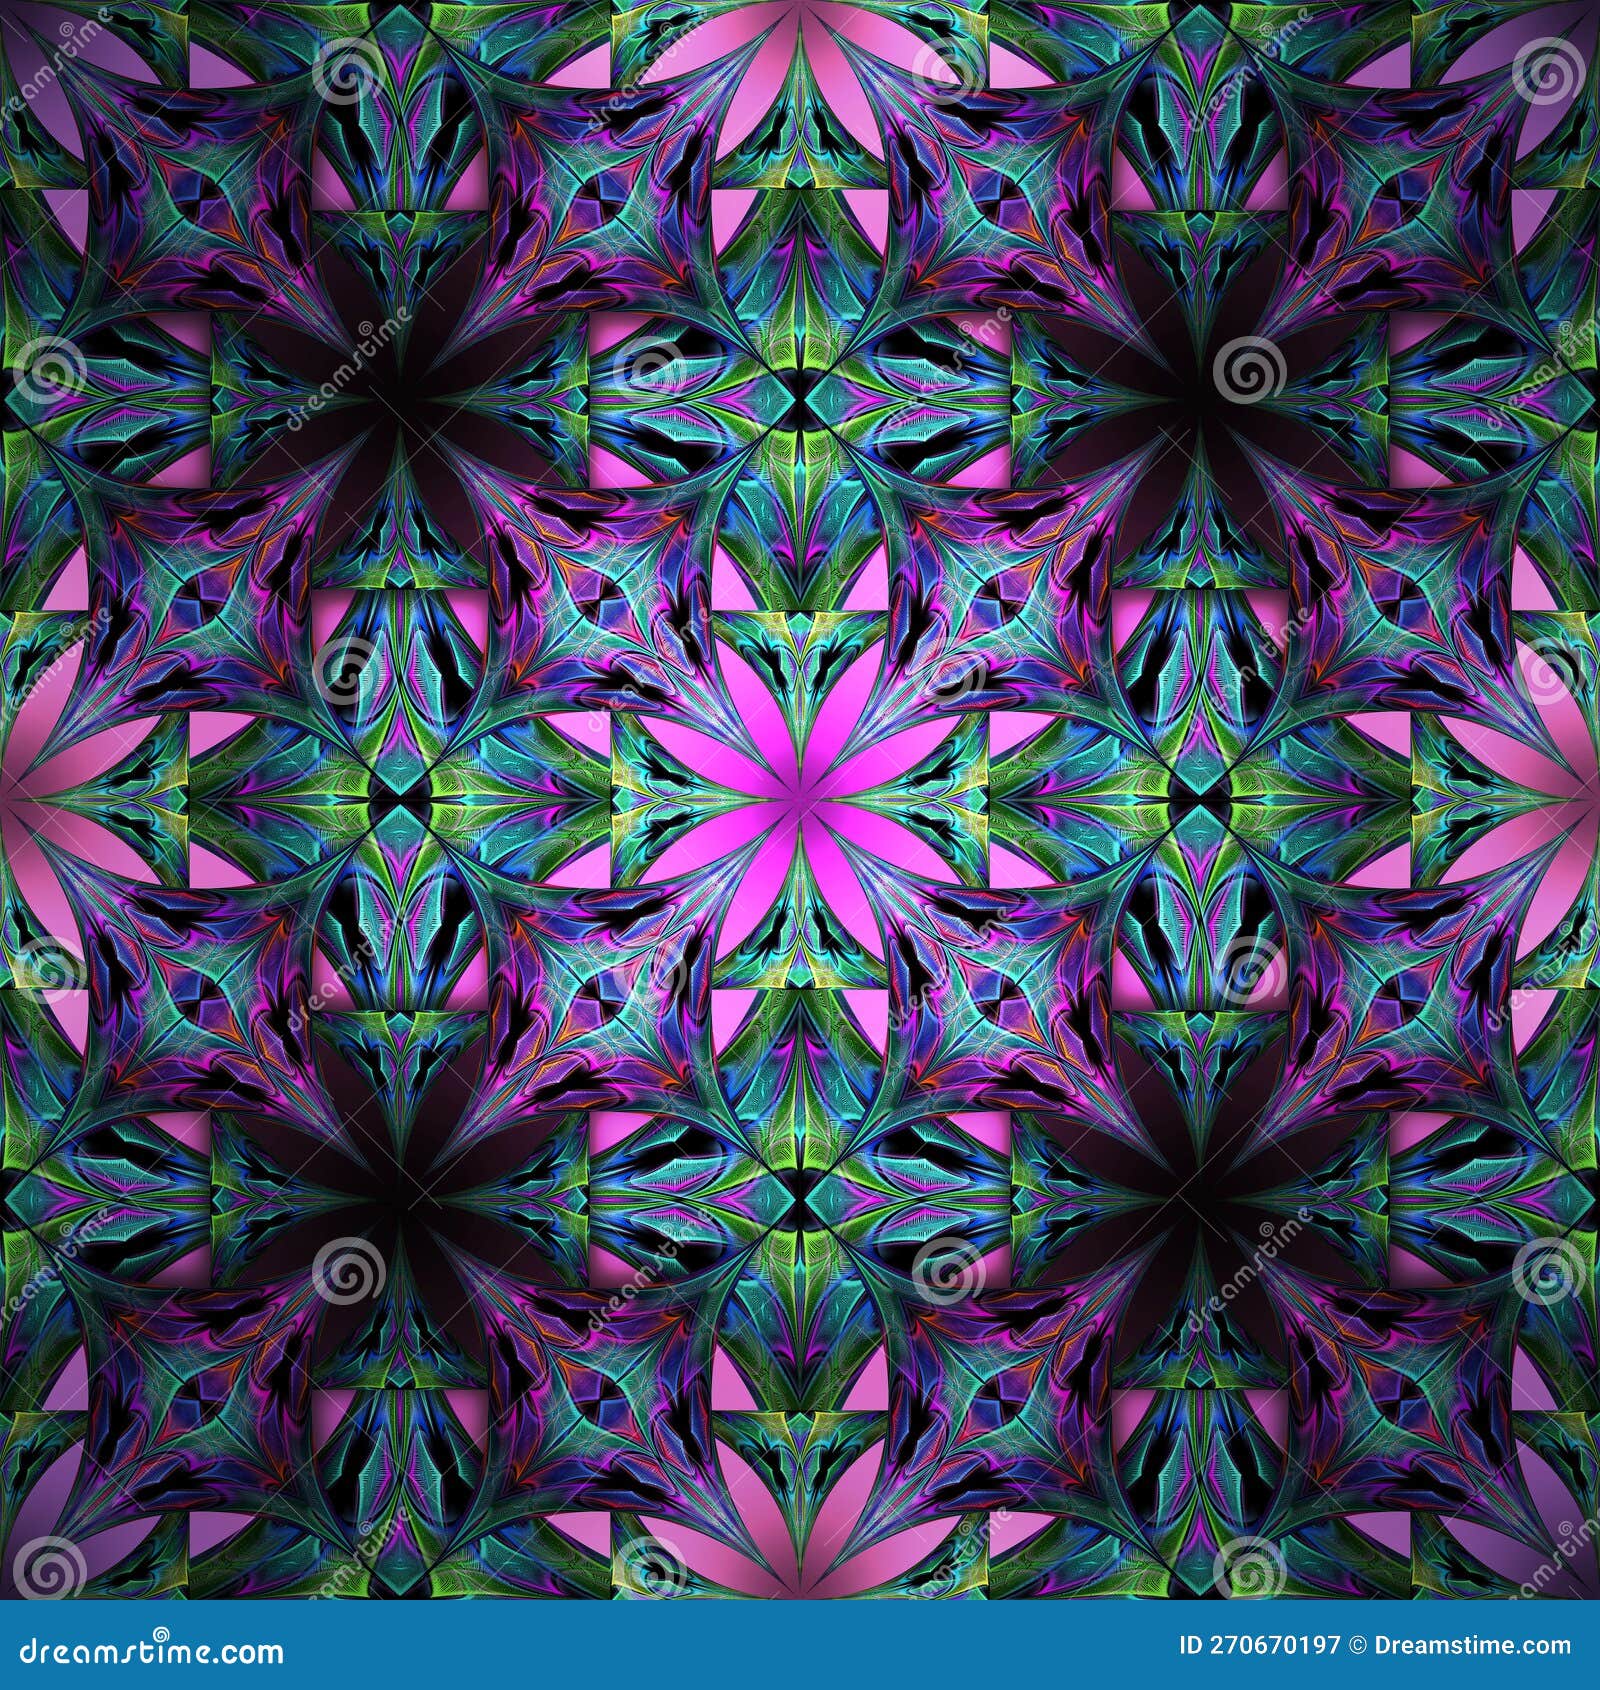 glass kaleidoscope square refract tile glow fractal glowing symmetrical pattern